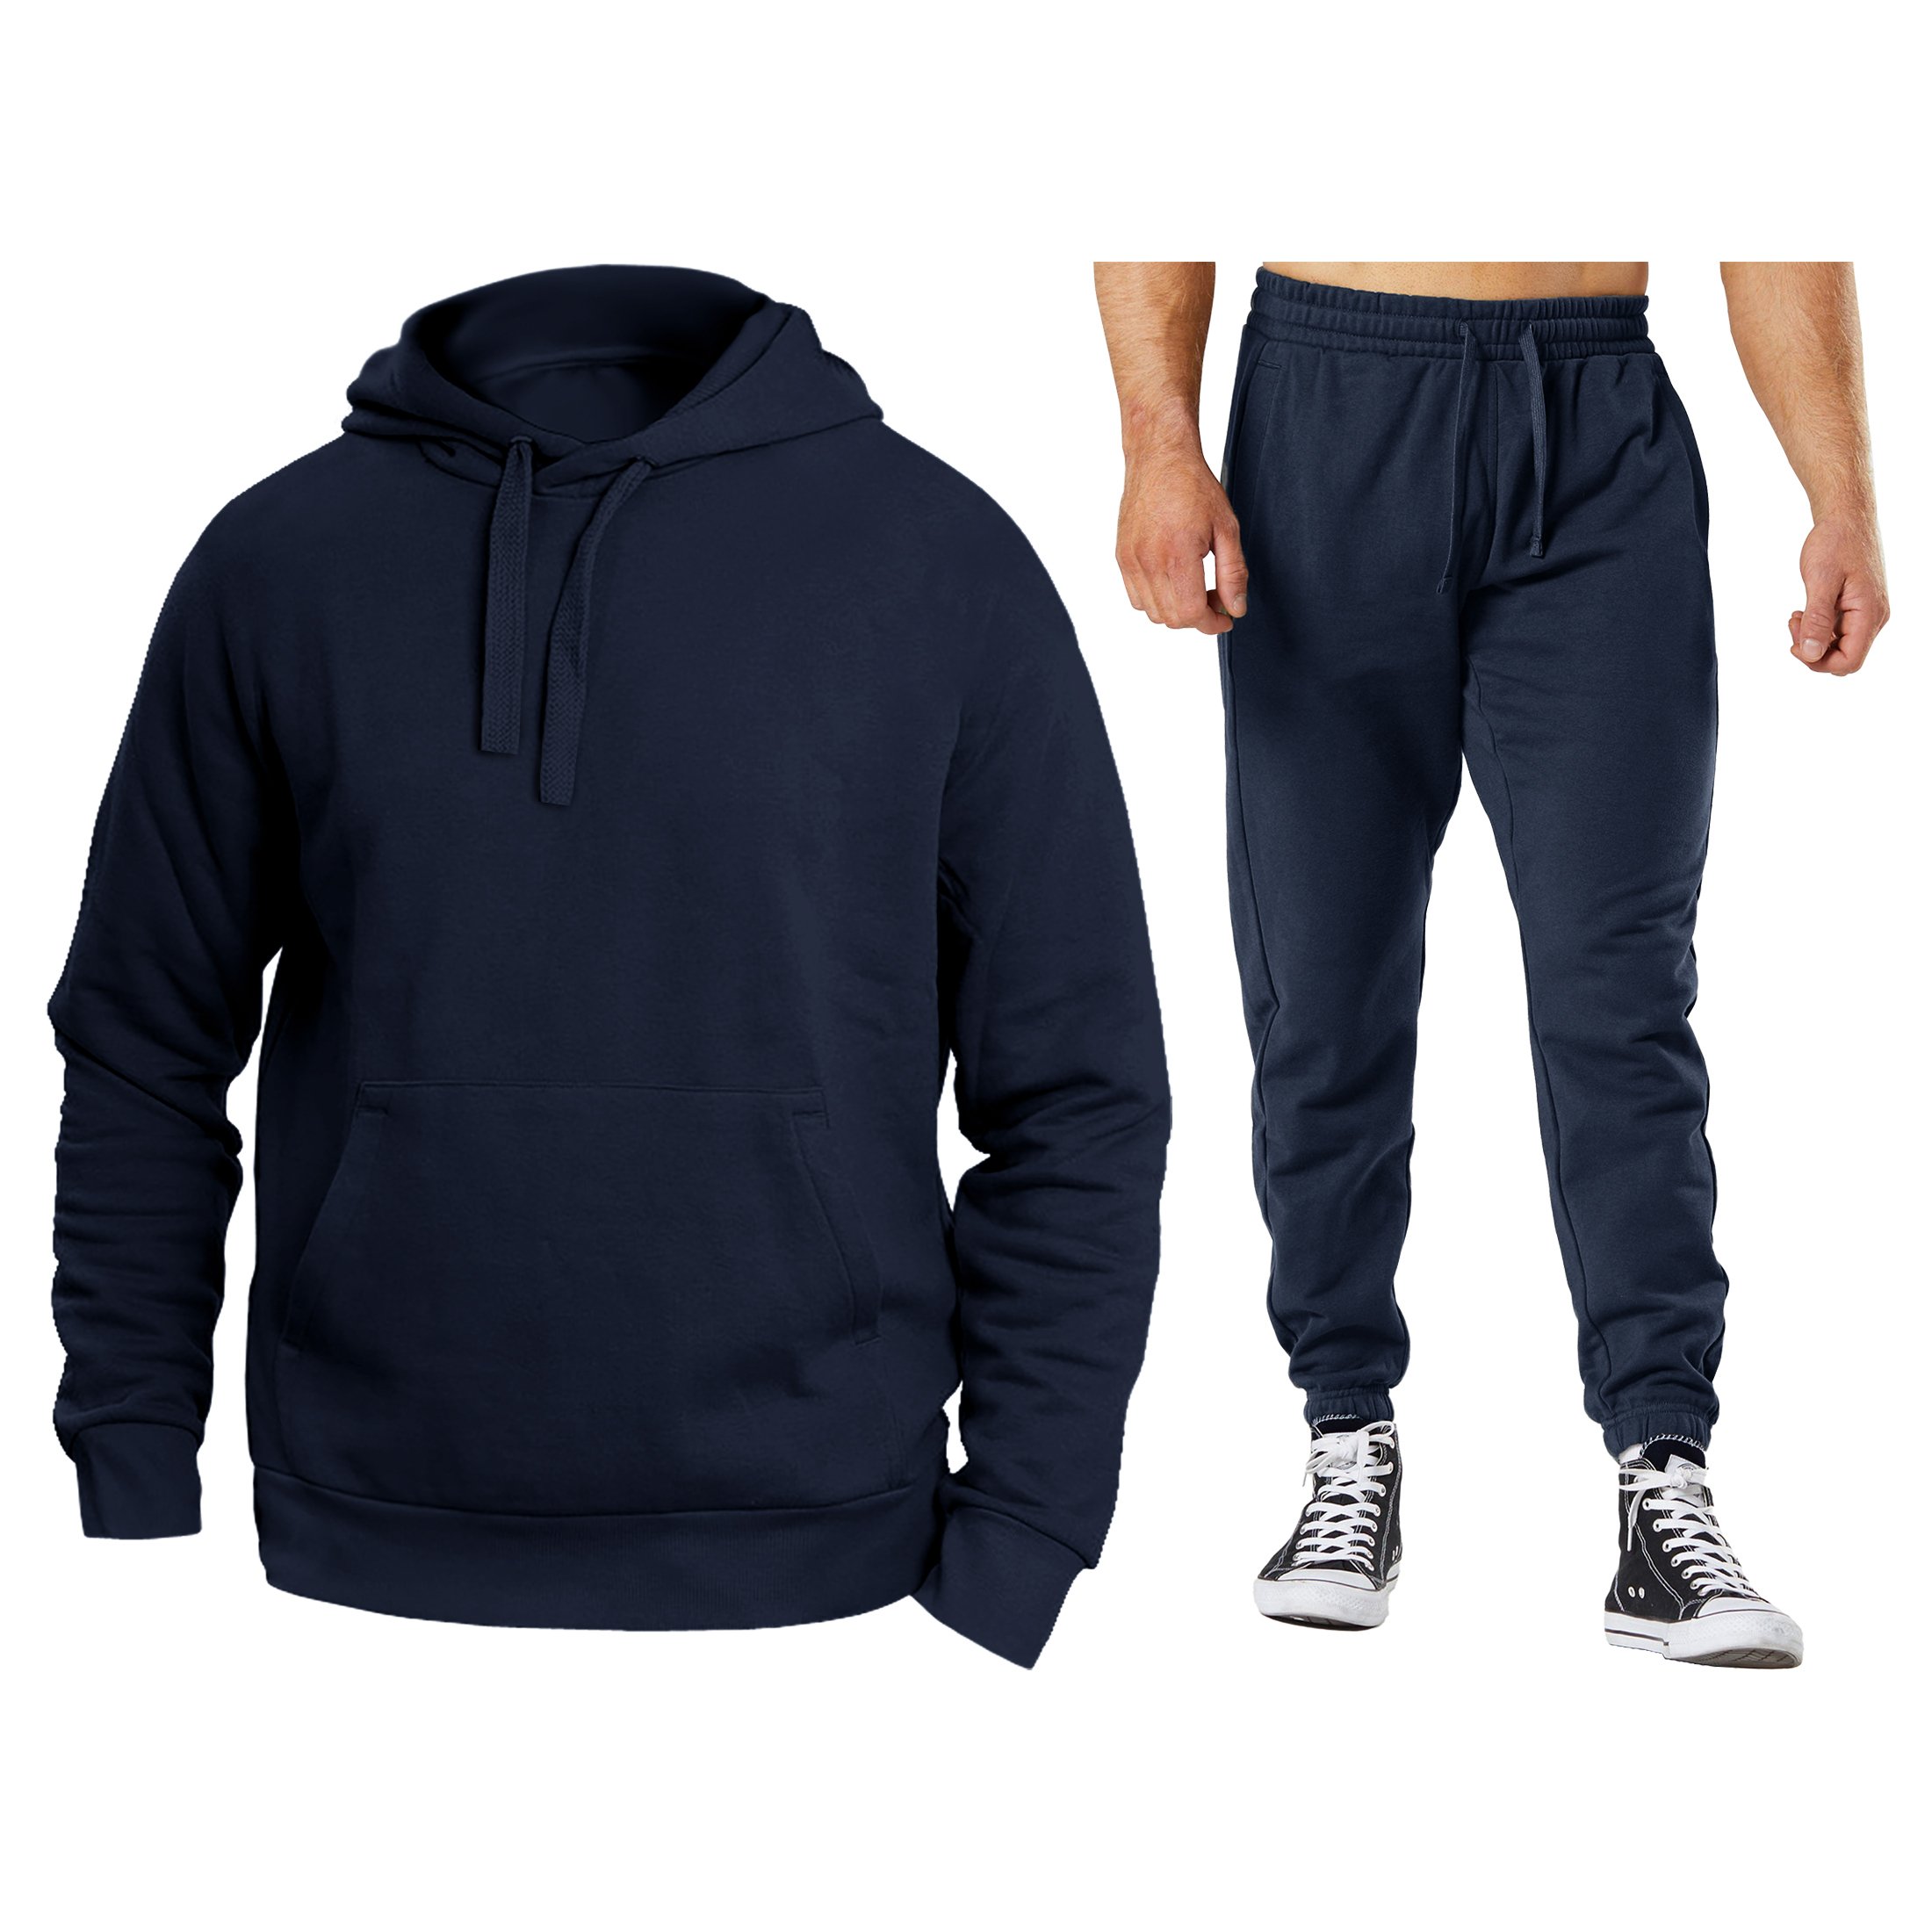 Men's Athletic Warm Jogging Pullover Active Sweatsuit - Grey, X-Large